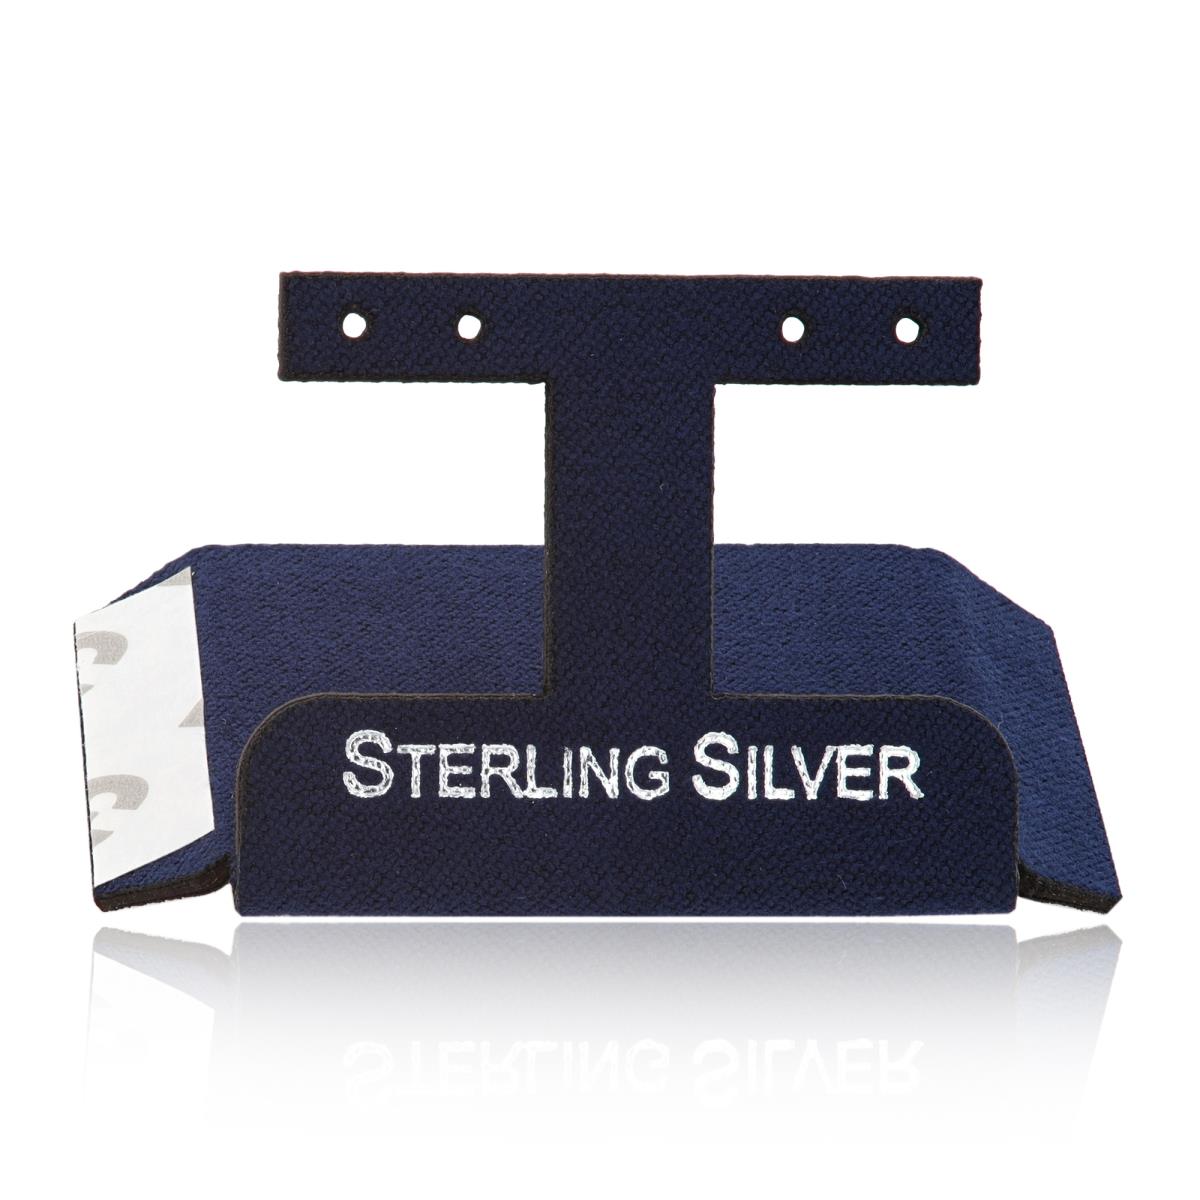 Navy Sterling Silver, Silver Foil 2 Huggie Insert (Box B06-159/Navy/D)